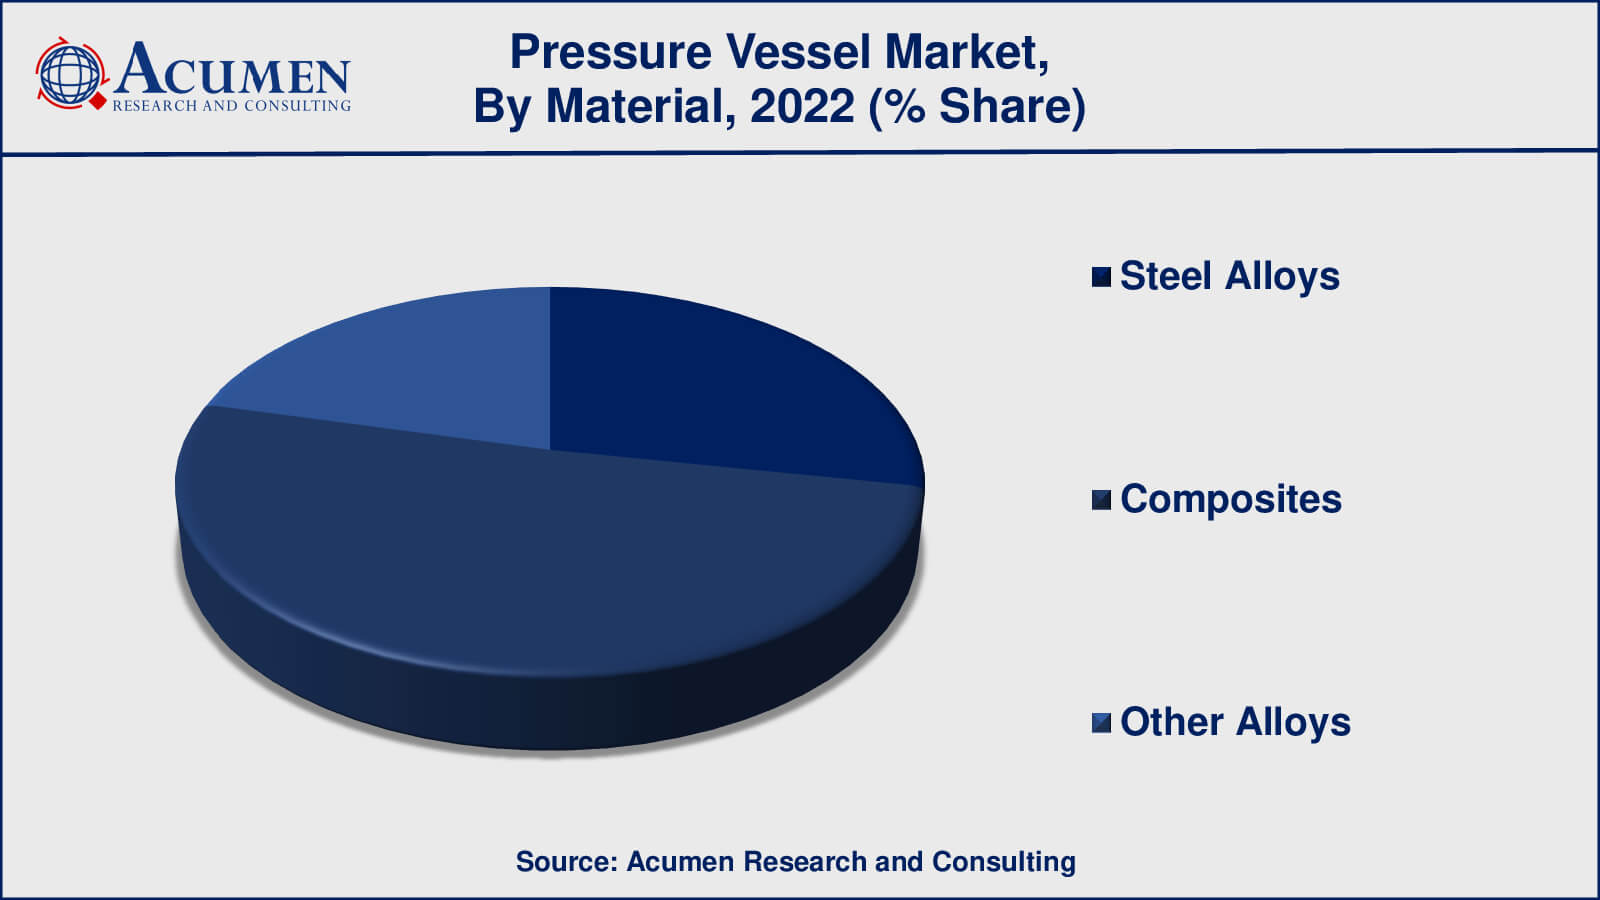 Pressure Vessel Market Drivers